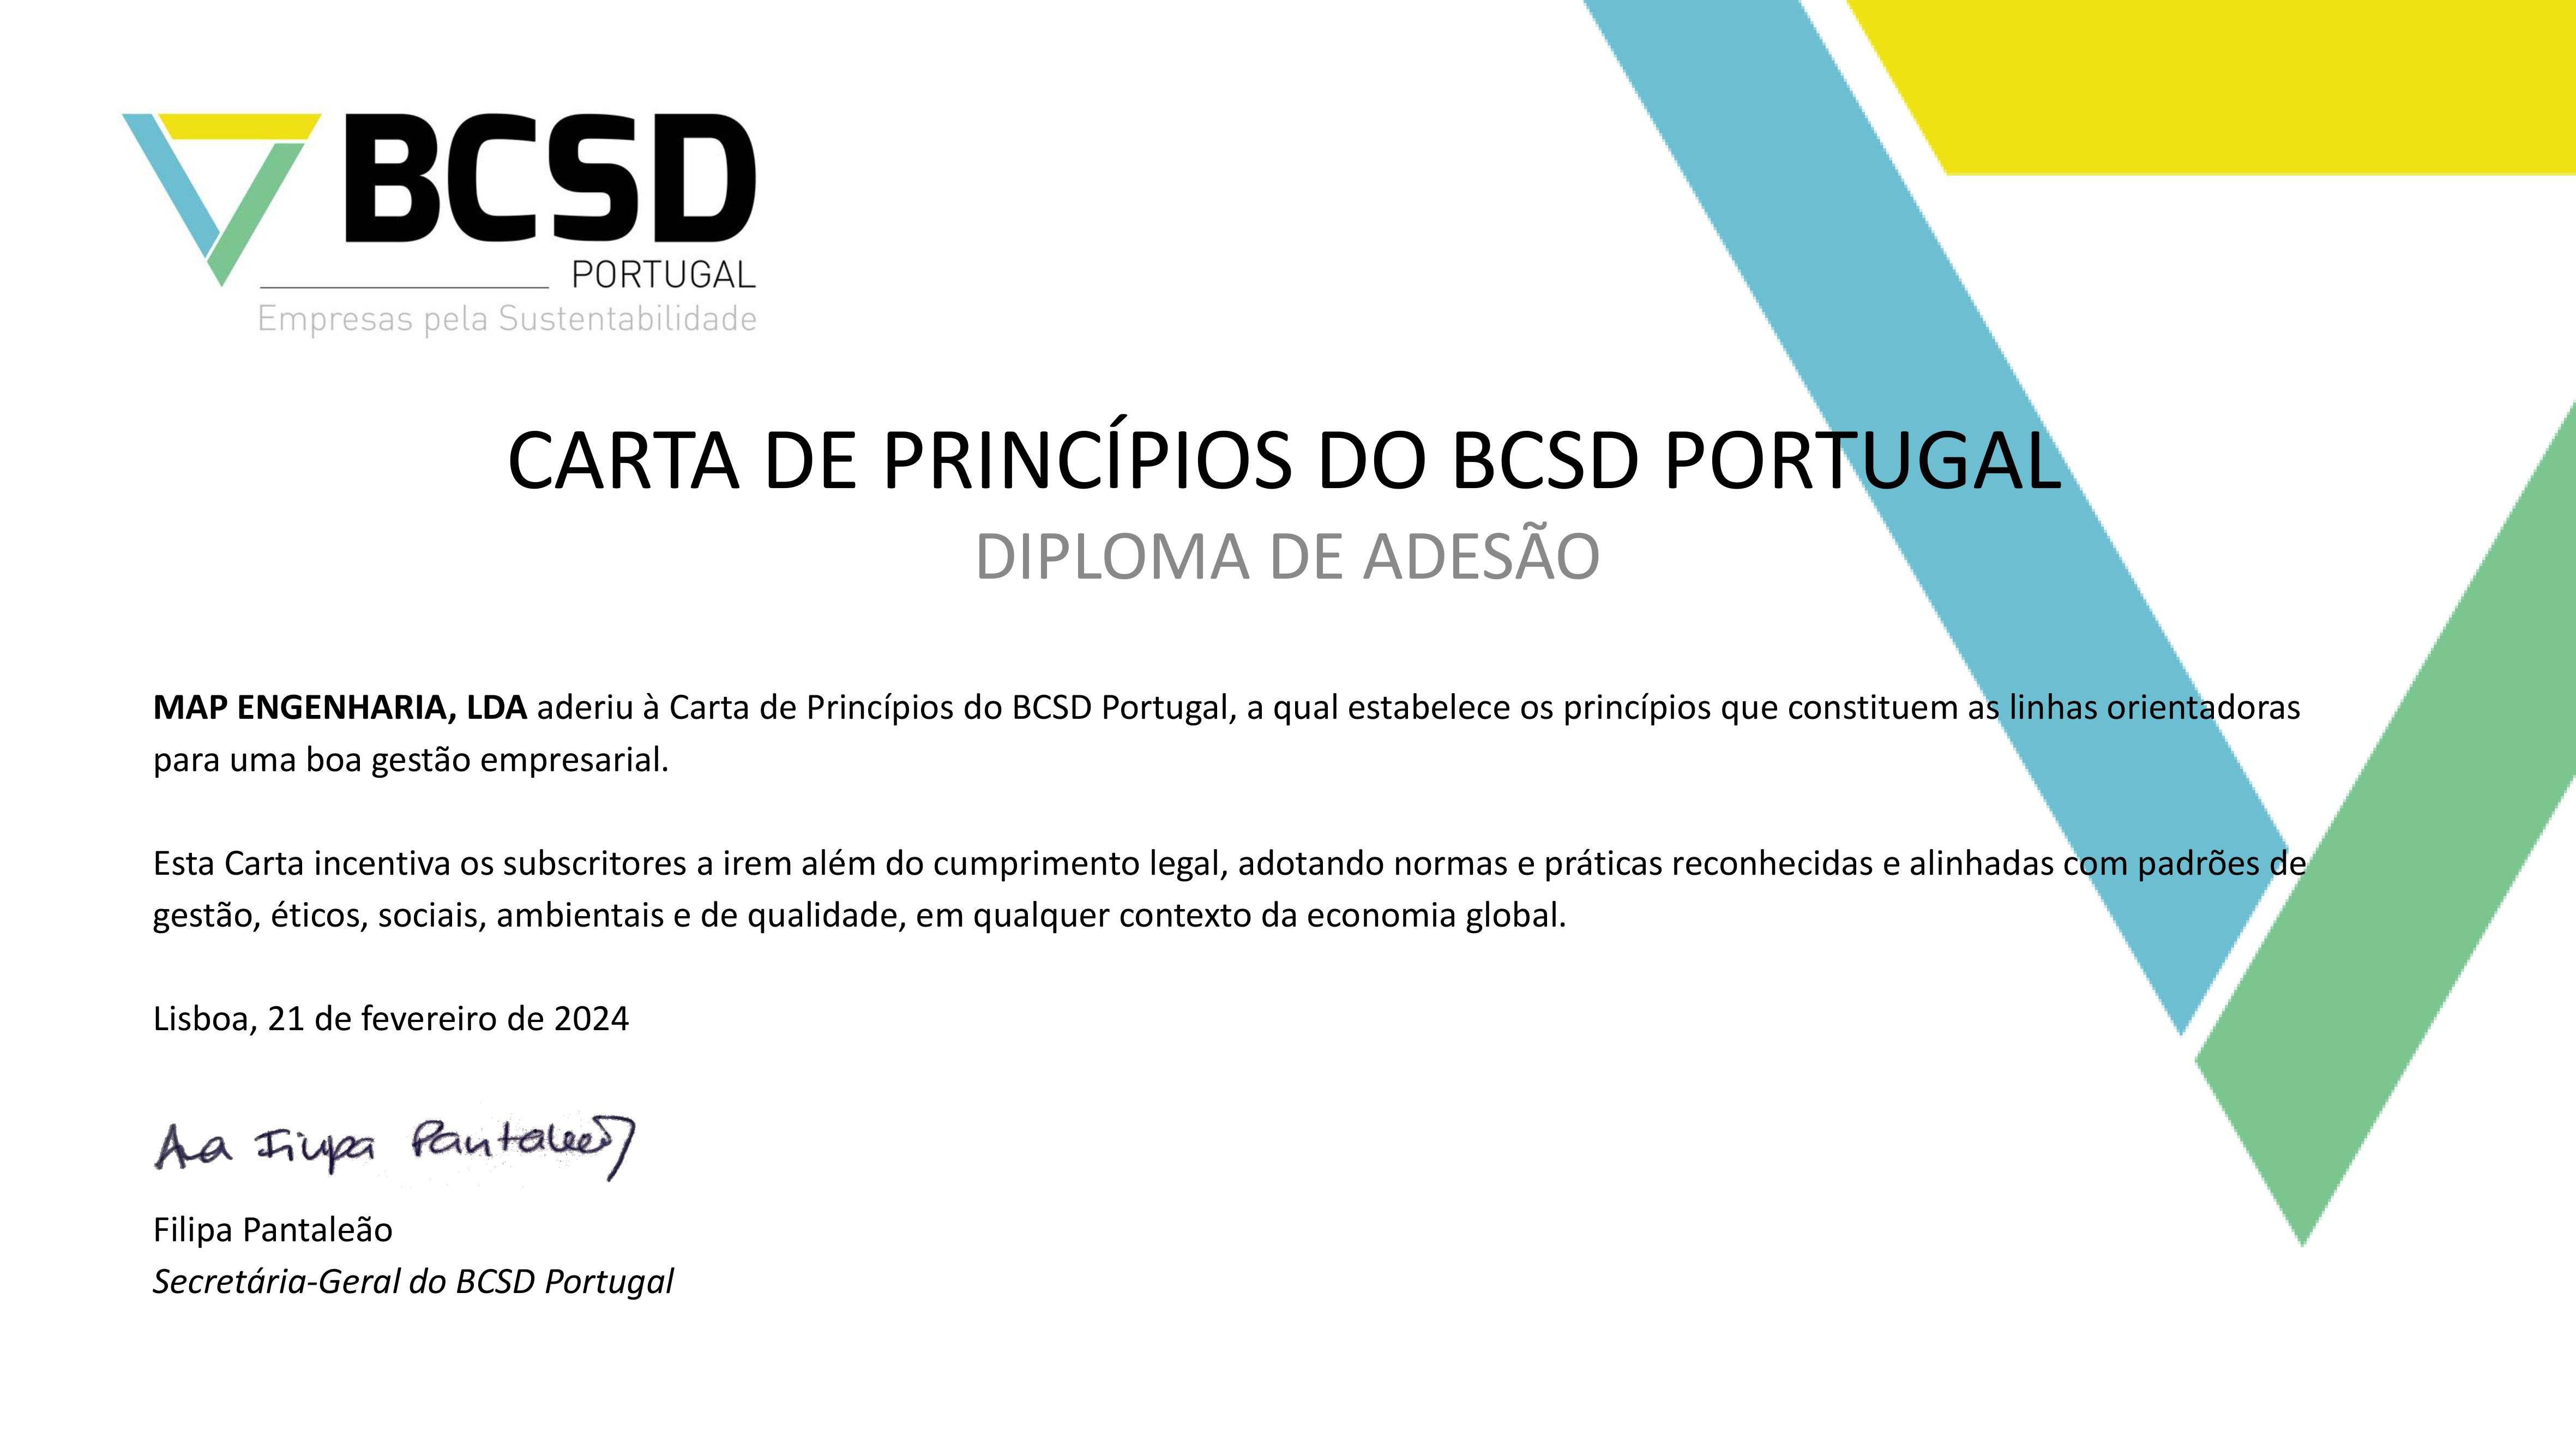 Diploma Carta de Princípios BCSD Portugal_MAP ENGENHARIA, LDA.jpg